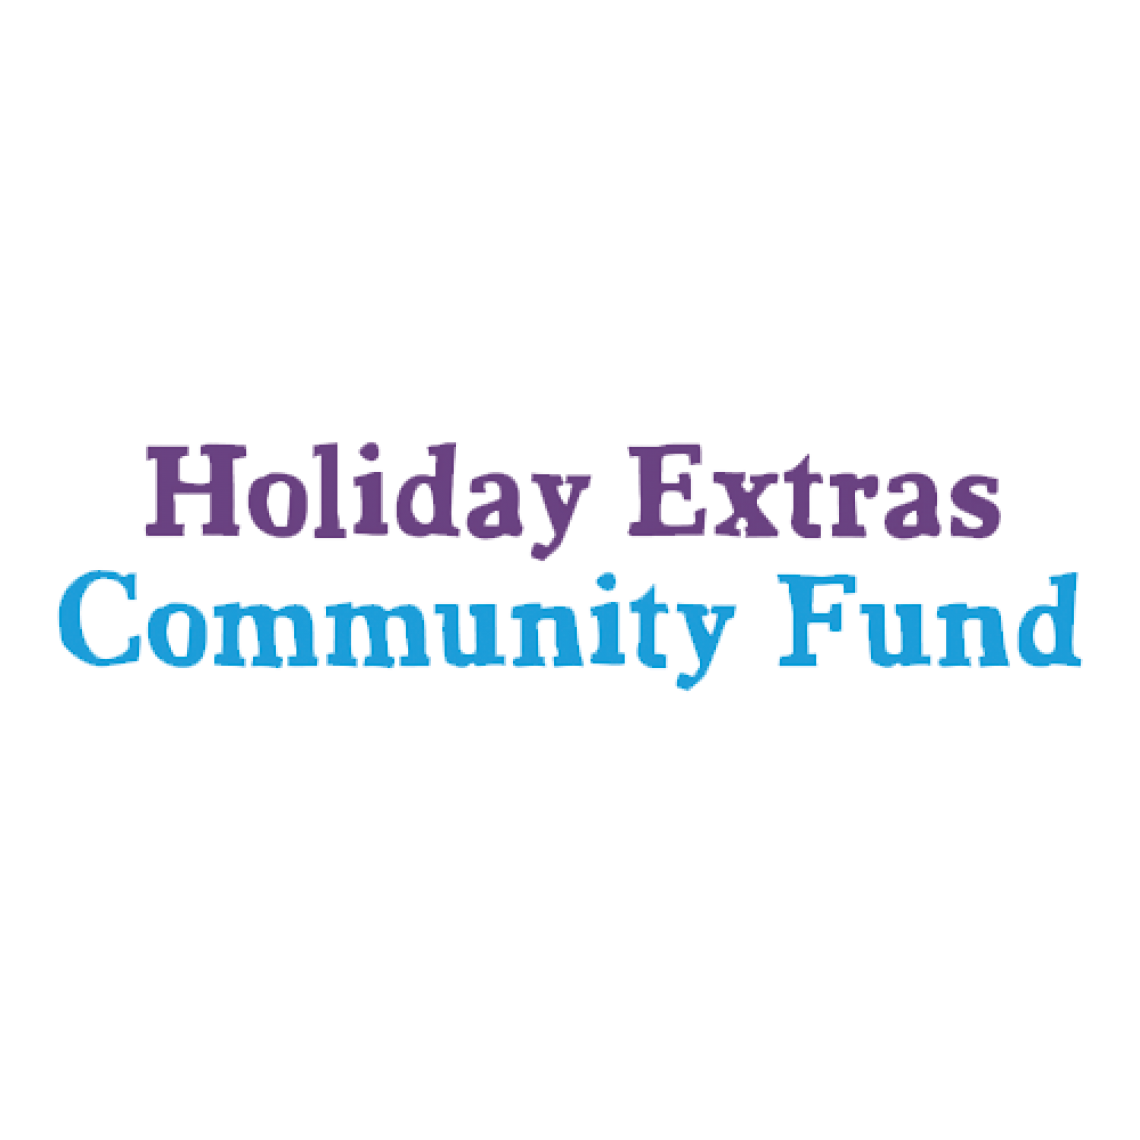 Holiday Extras Community Fund